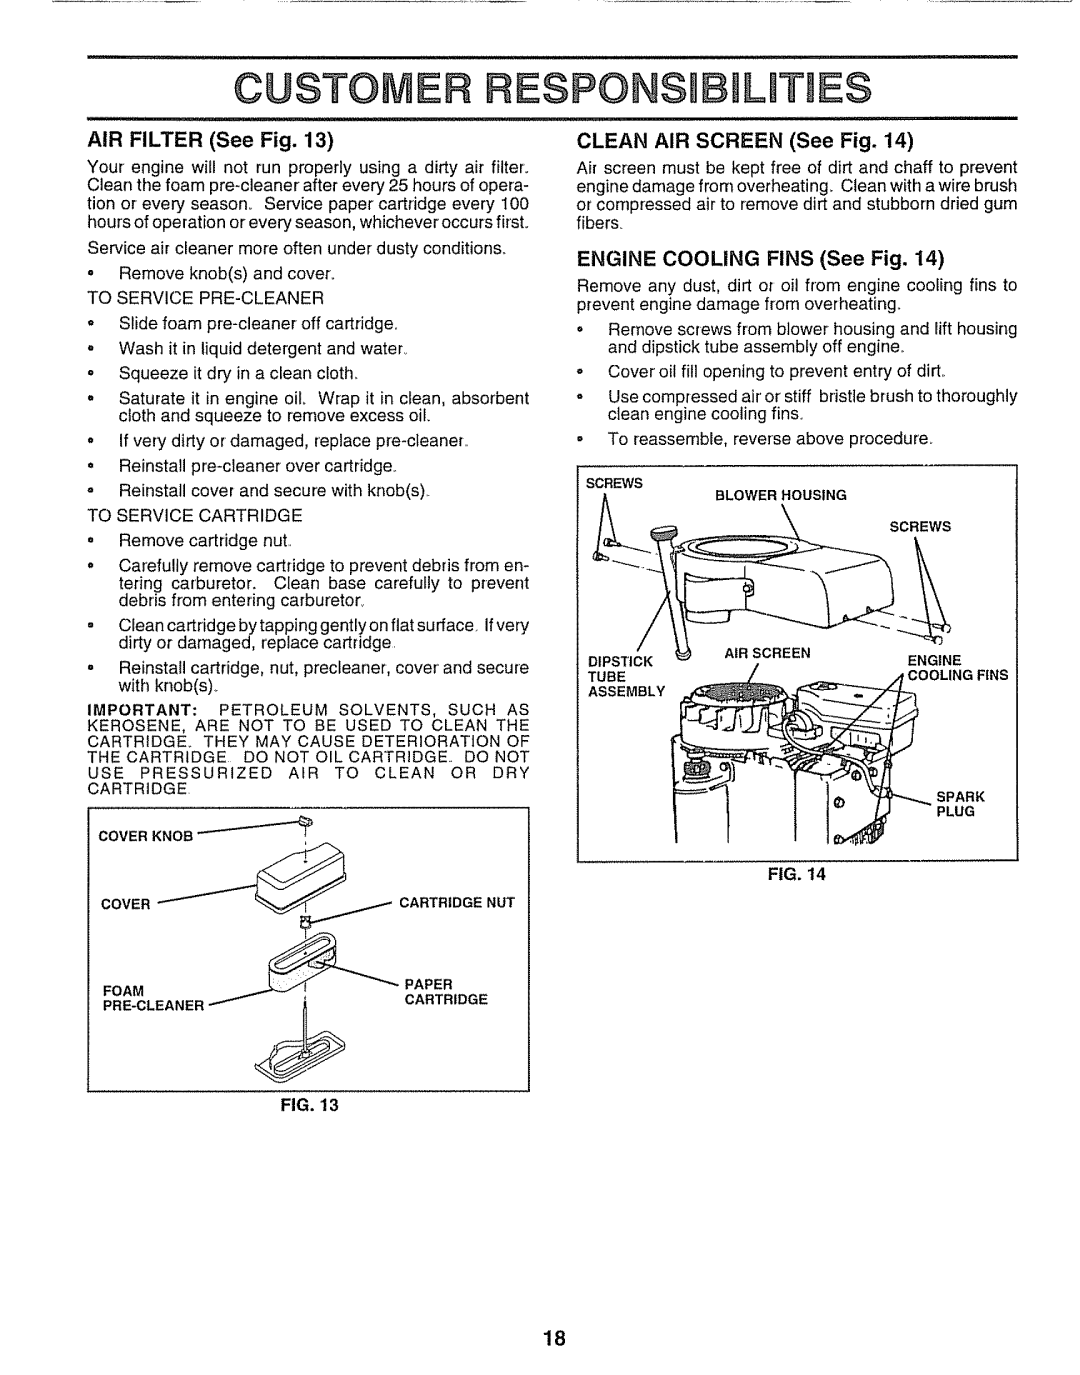 Craftsman 917.25651 owner manual Esponsu Lines, E Leaner-I: J Ca.Tr,Dge, CLEAN AIR SCREEN See Fig 